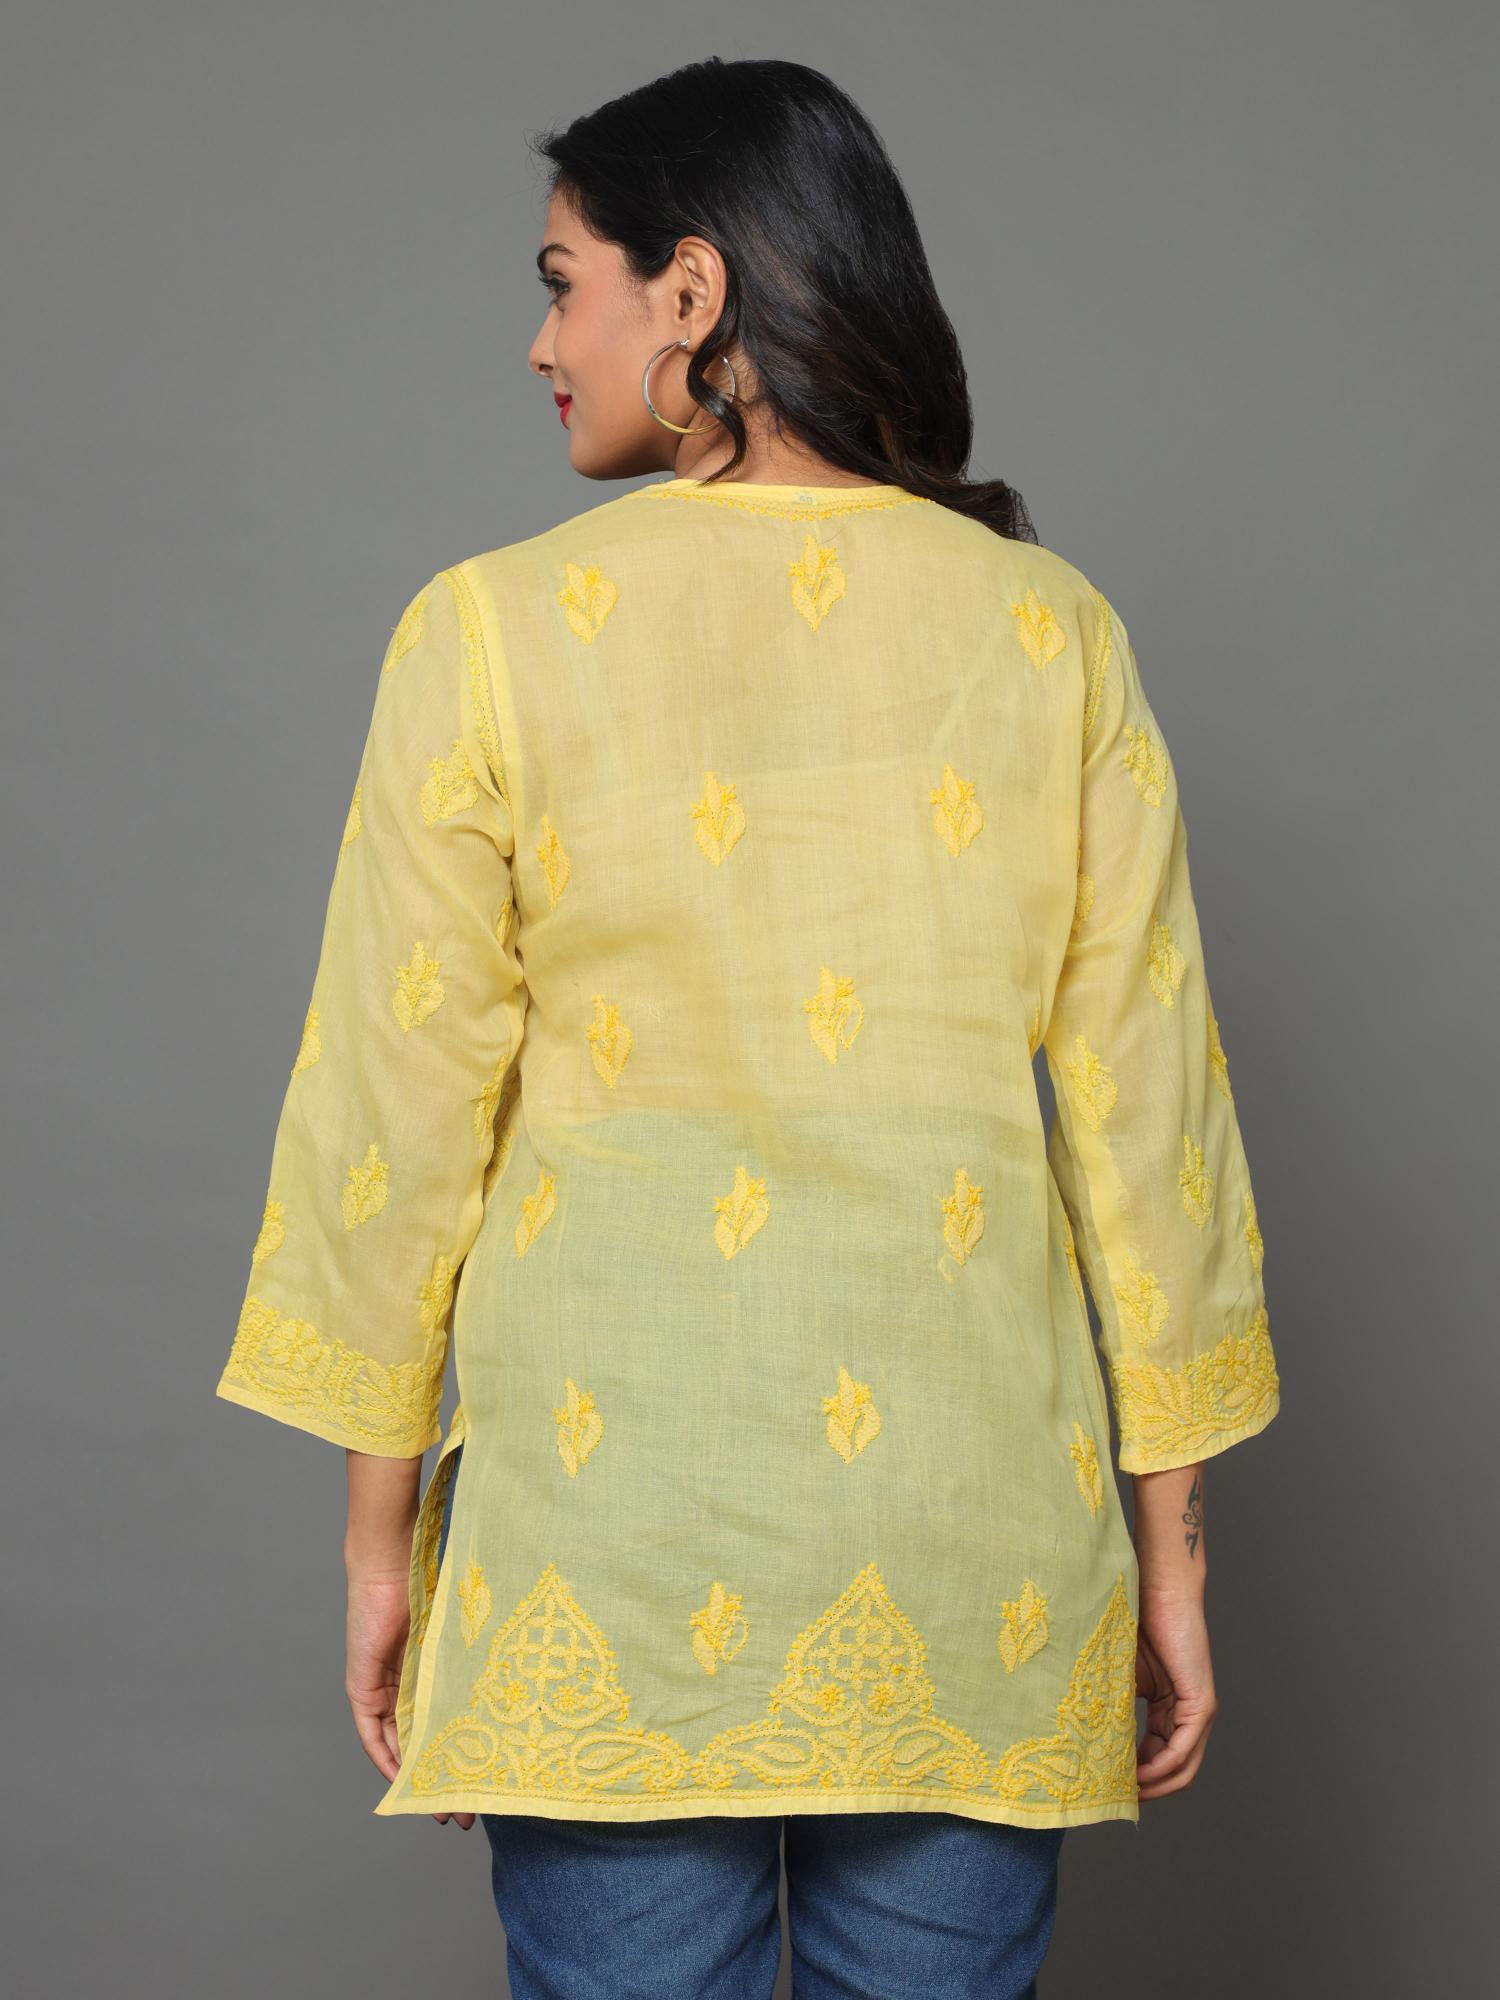 HerClozet Lucknow Chikankari Cotton Top-Yellow,Size 36